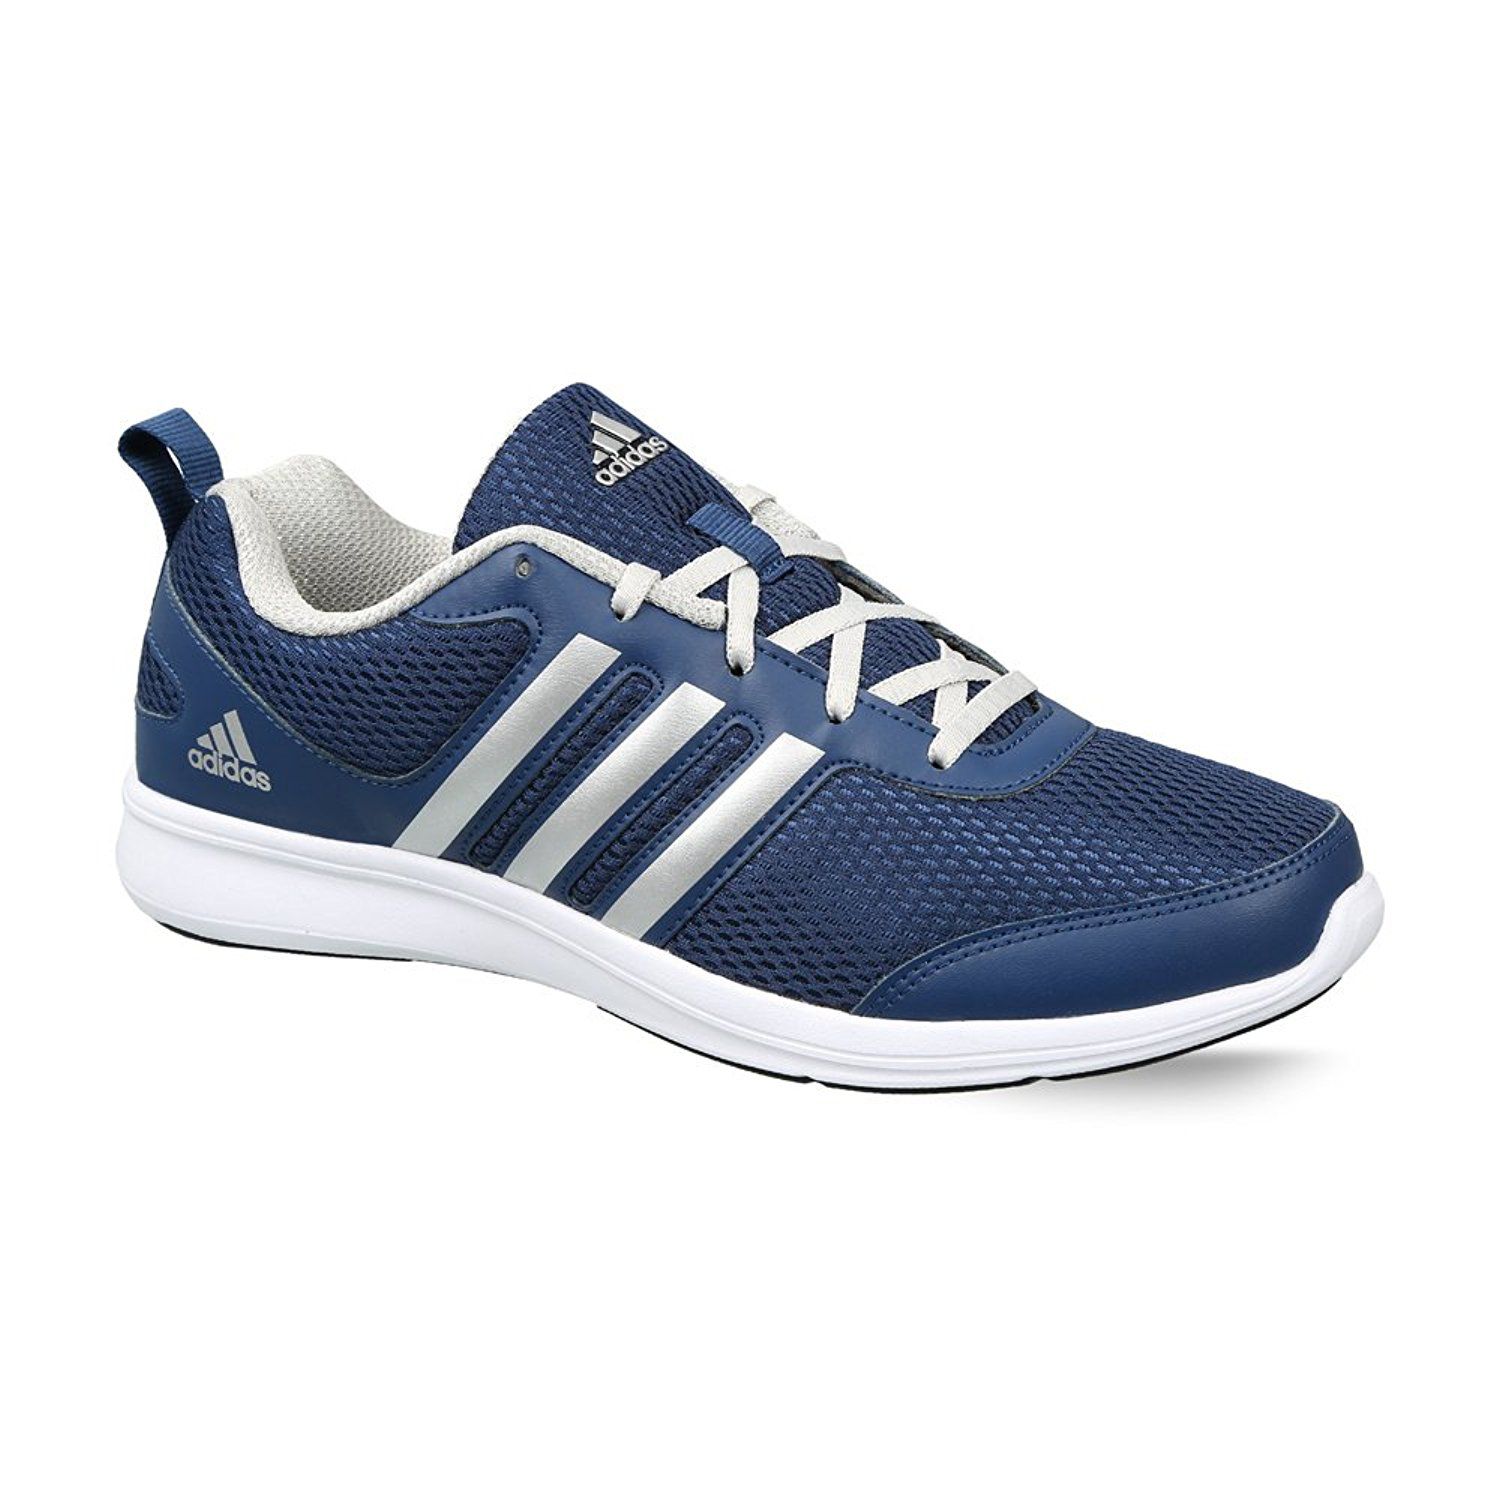 Adidas Yking Blue Running Shoes Buy Adidas Yking Blue